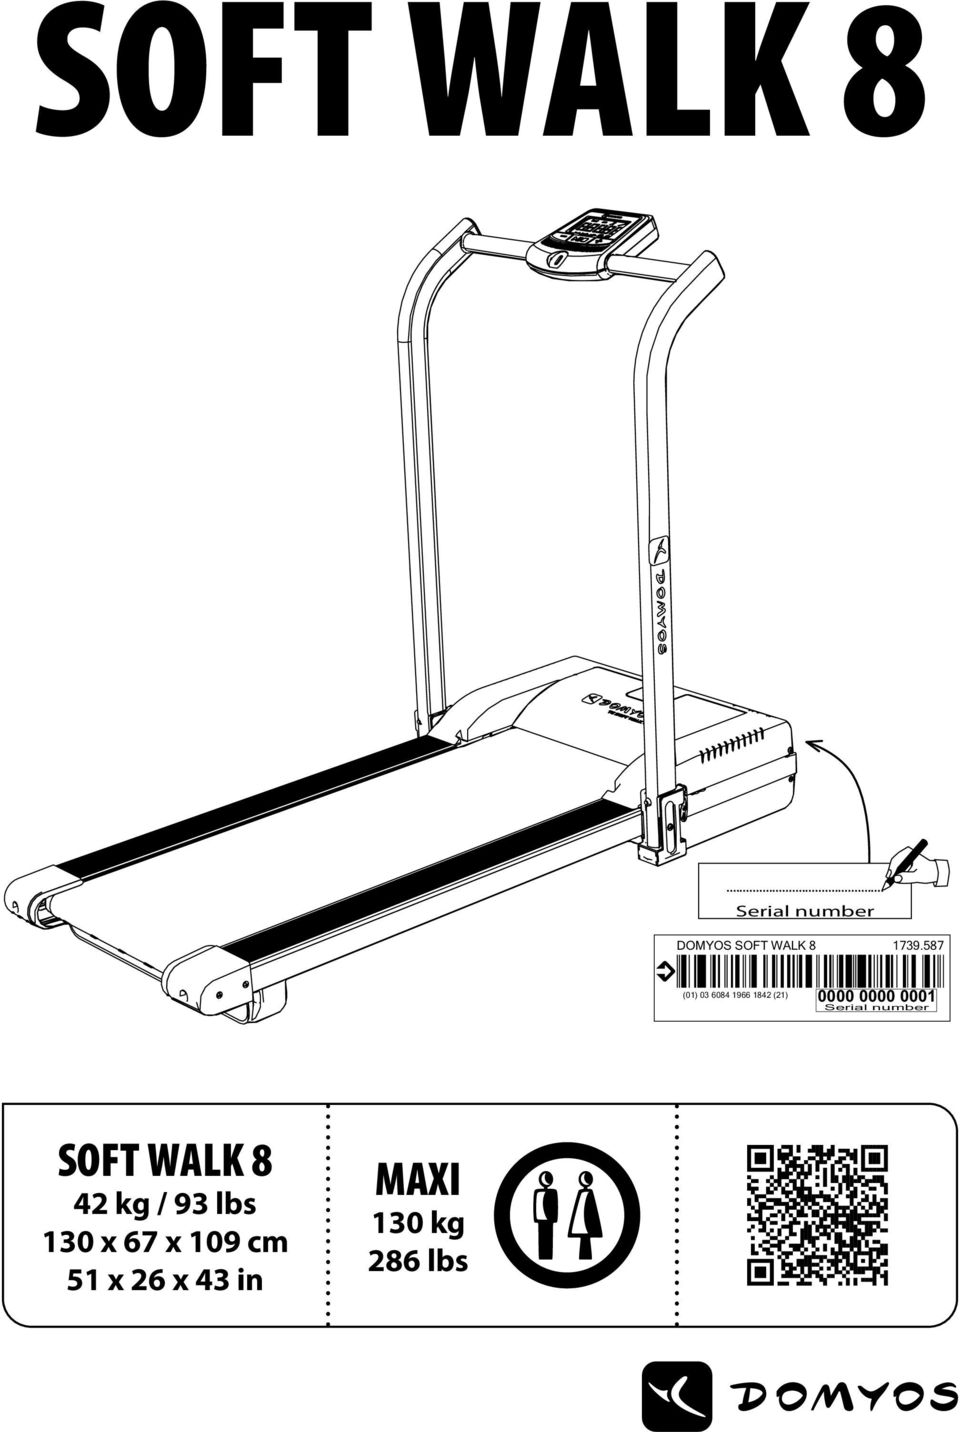 SOFT WALK 8 SOFT WALK 8 MAXI. 42 kg 